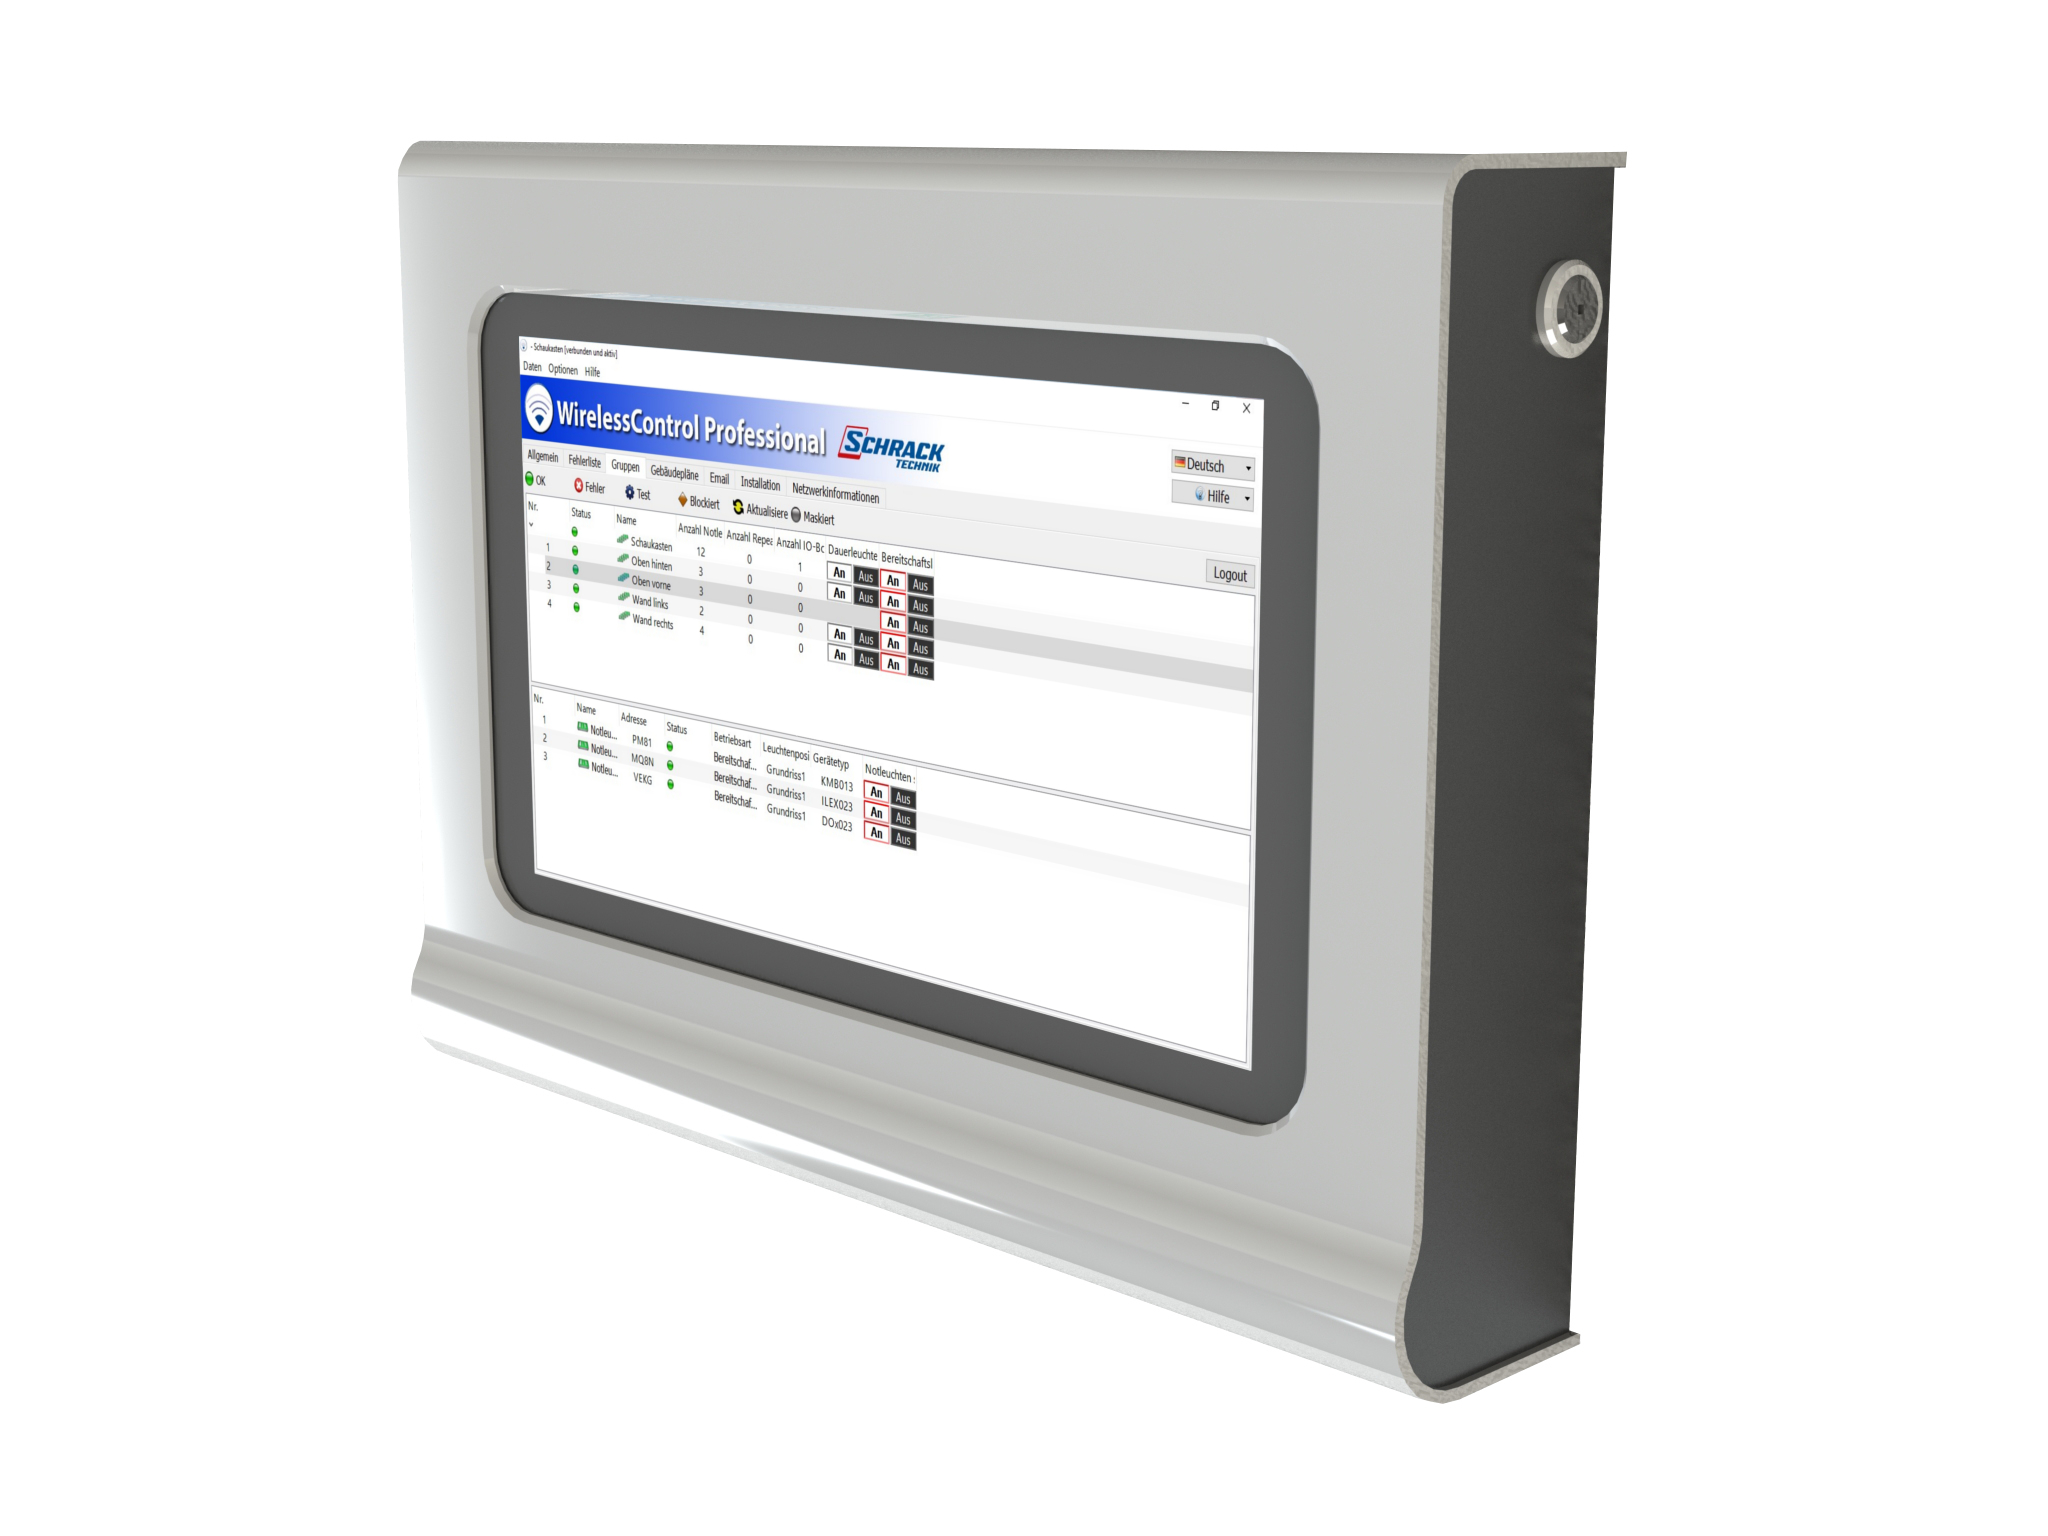 Netbook Touch5 incl. wall housing WirelessControl Software